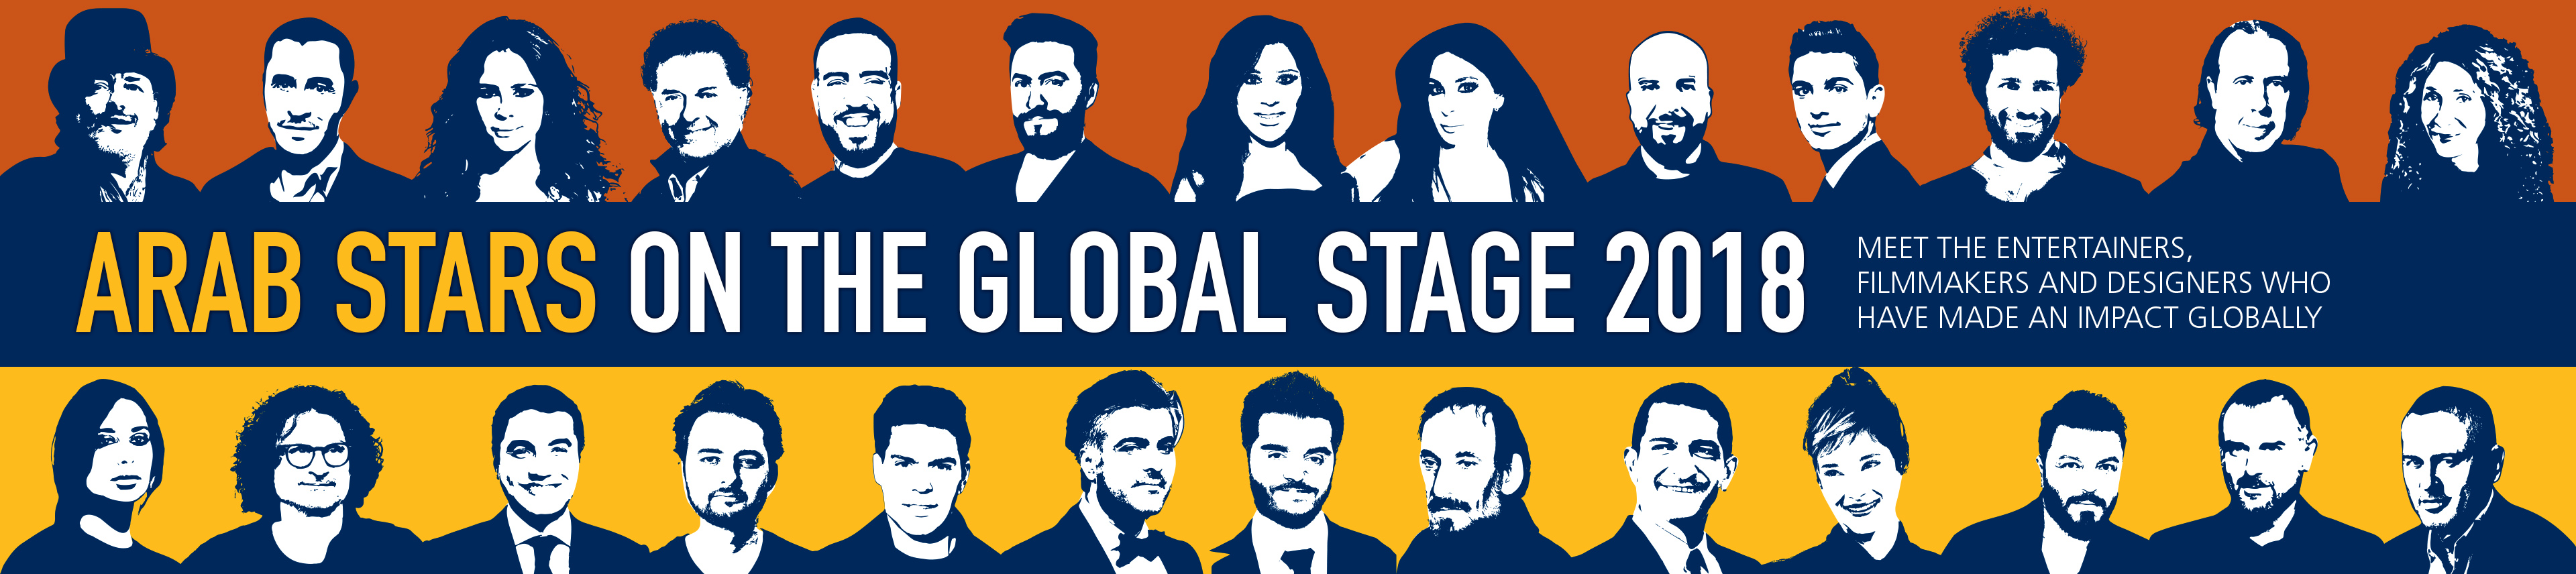 Arab Stars On The Global Stage 2018